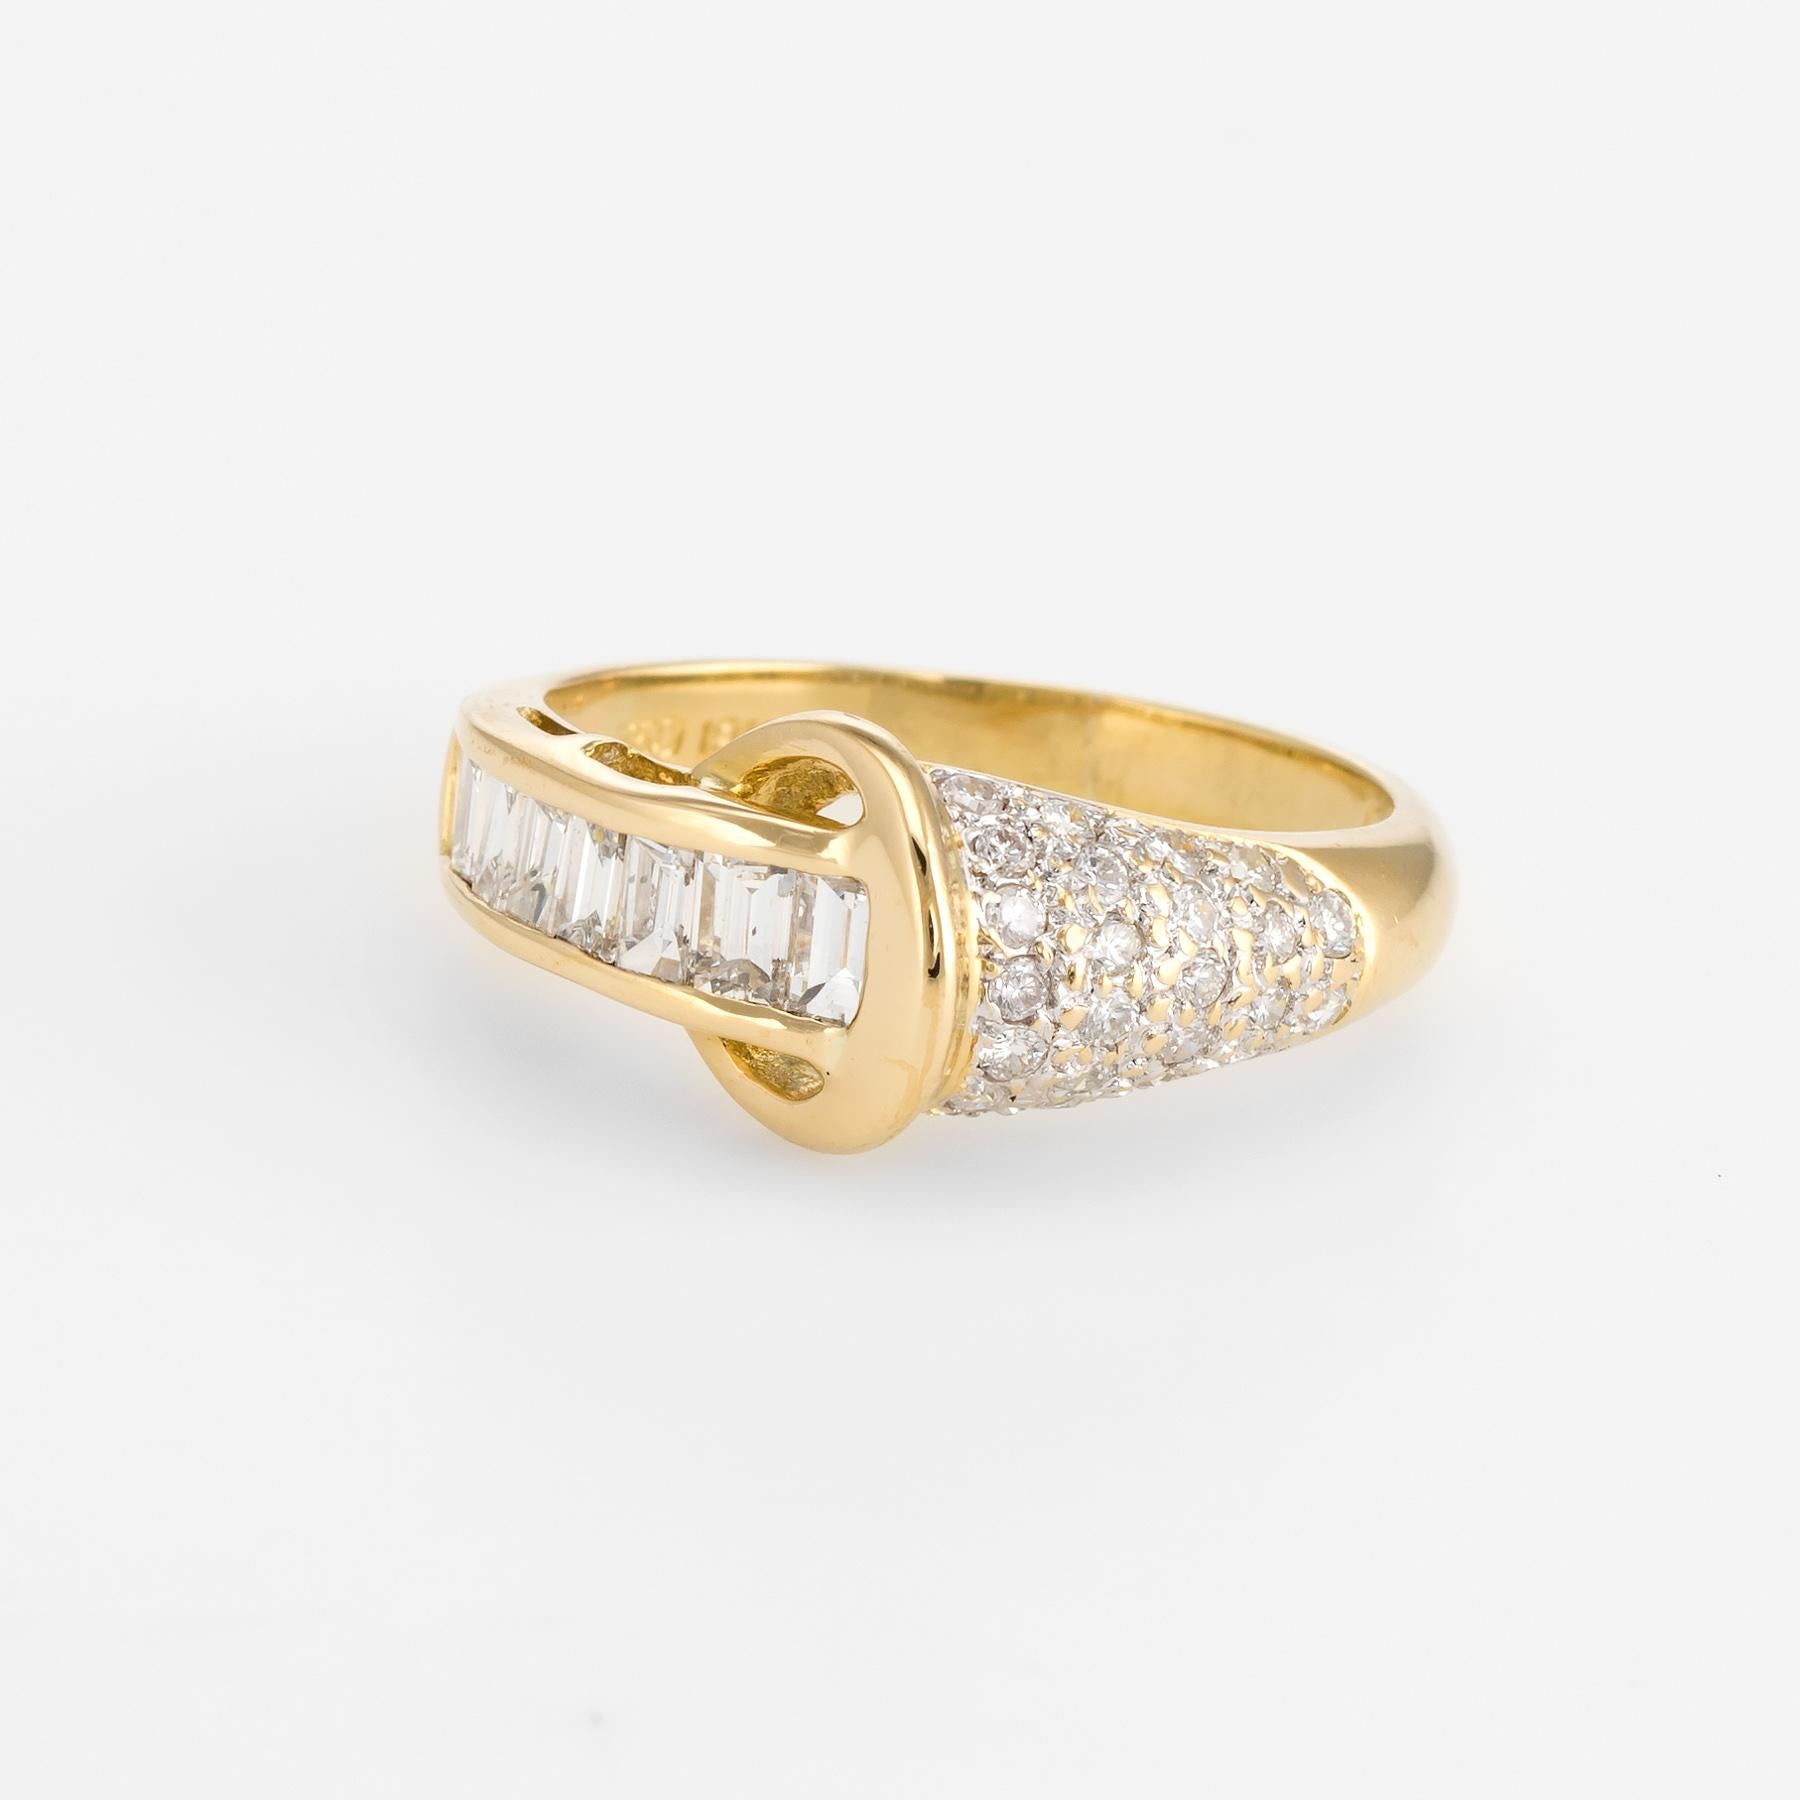 Vintage Diamant Pinky Ring Mixed Cuts 18 Karat Gelbgold Estate Fine Jewelry (Baguetteschliff)